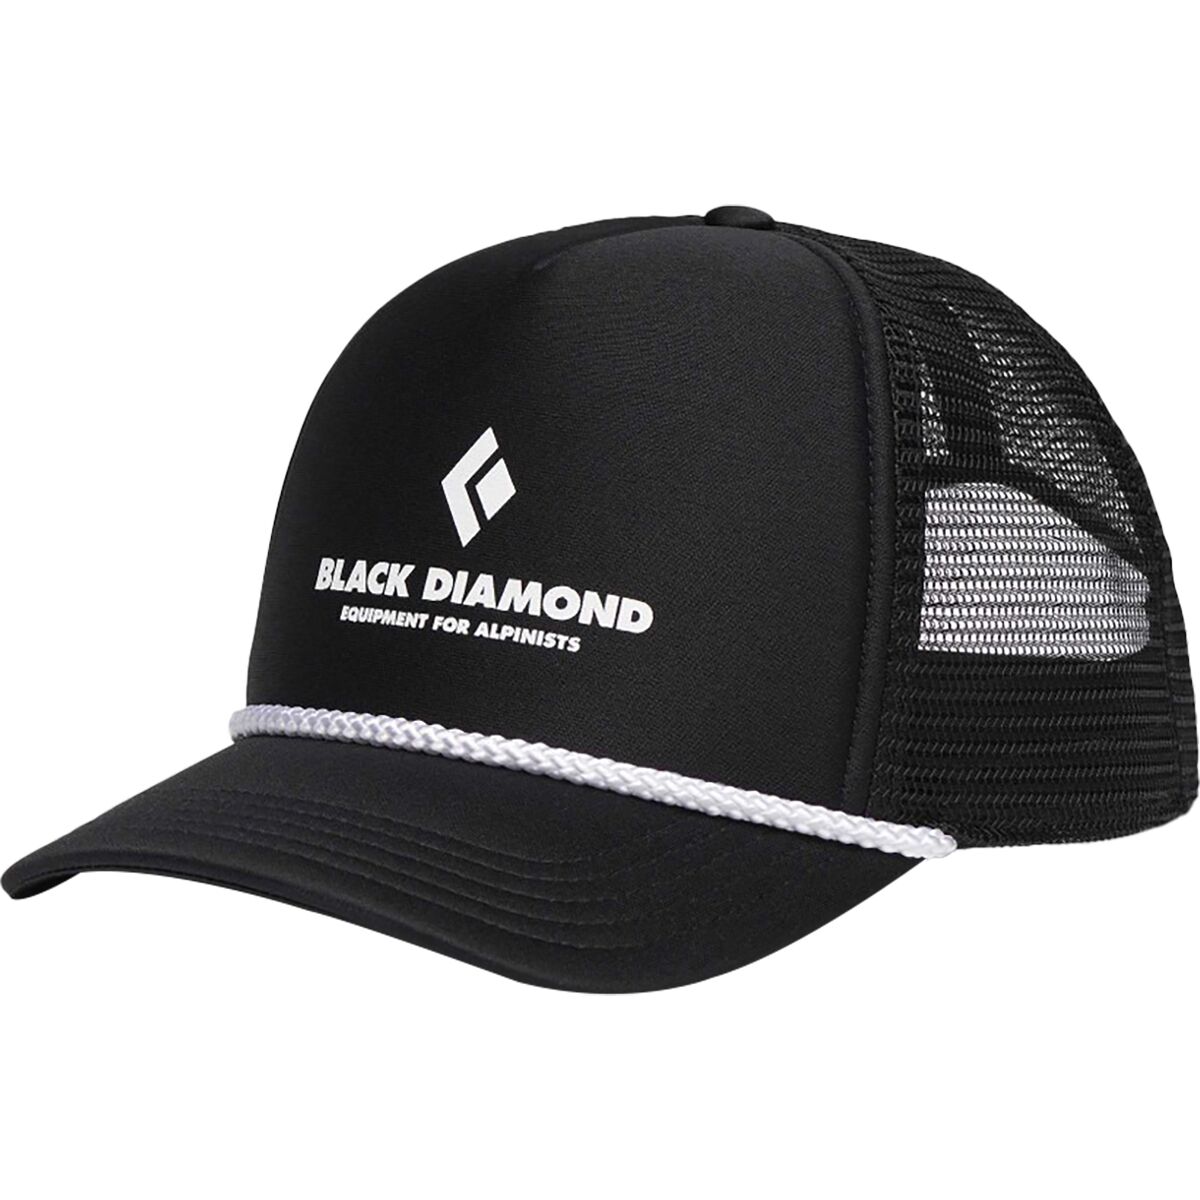 Кепка дальнобойщика с плоским козырьком Black Diamond, цвет black/black eqpmnt for alpnst fashion soft singapore heart flag hat gift dad hat trucker hat cowboy hat